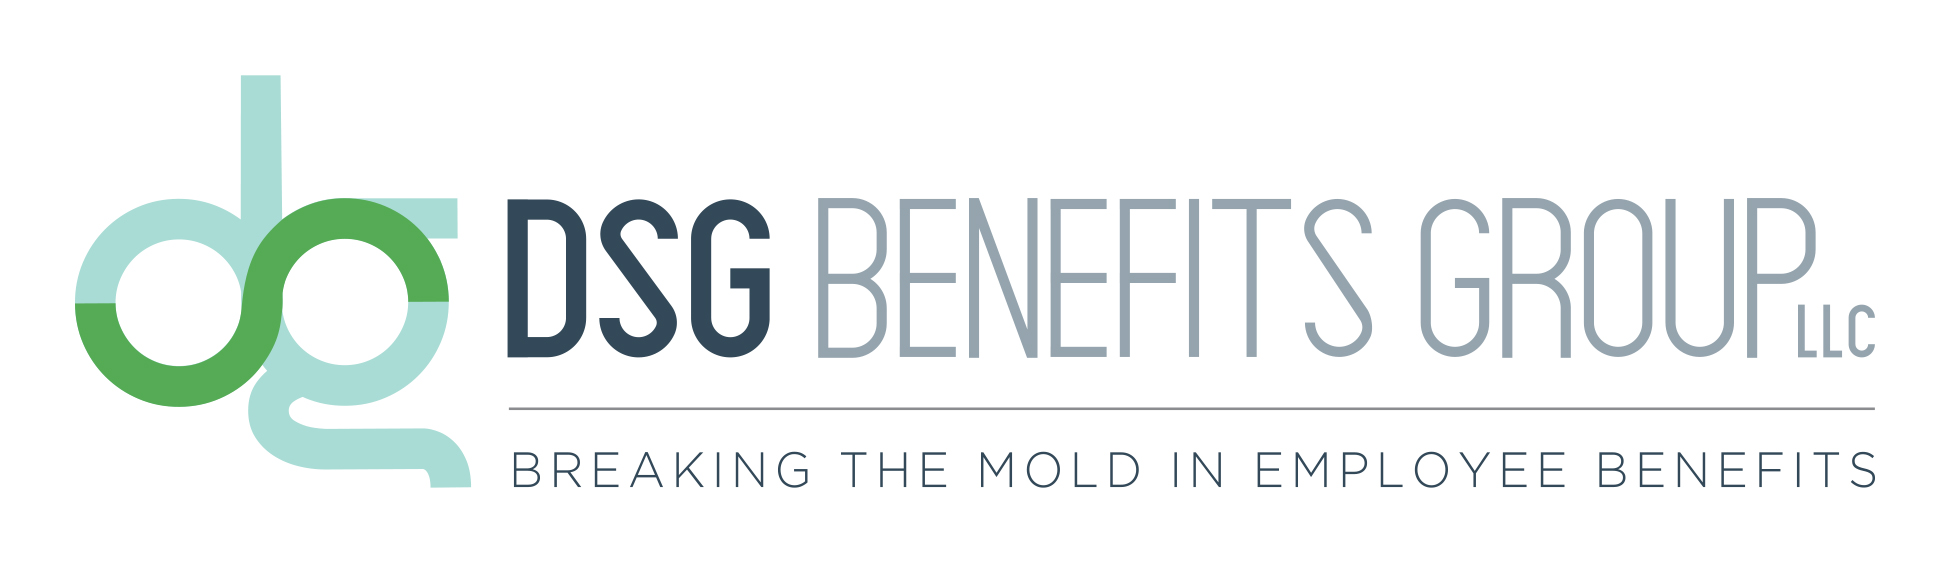 DSG Benefits Group Logo